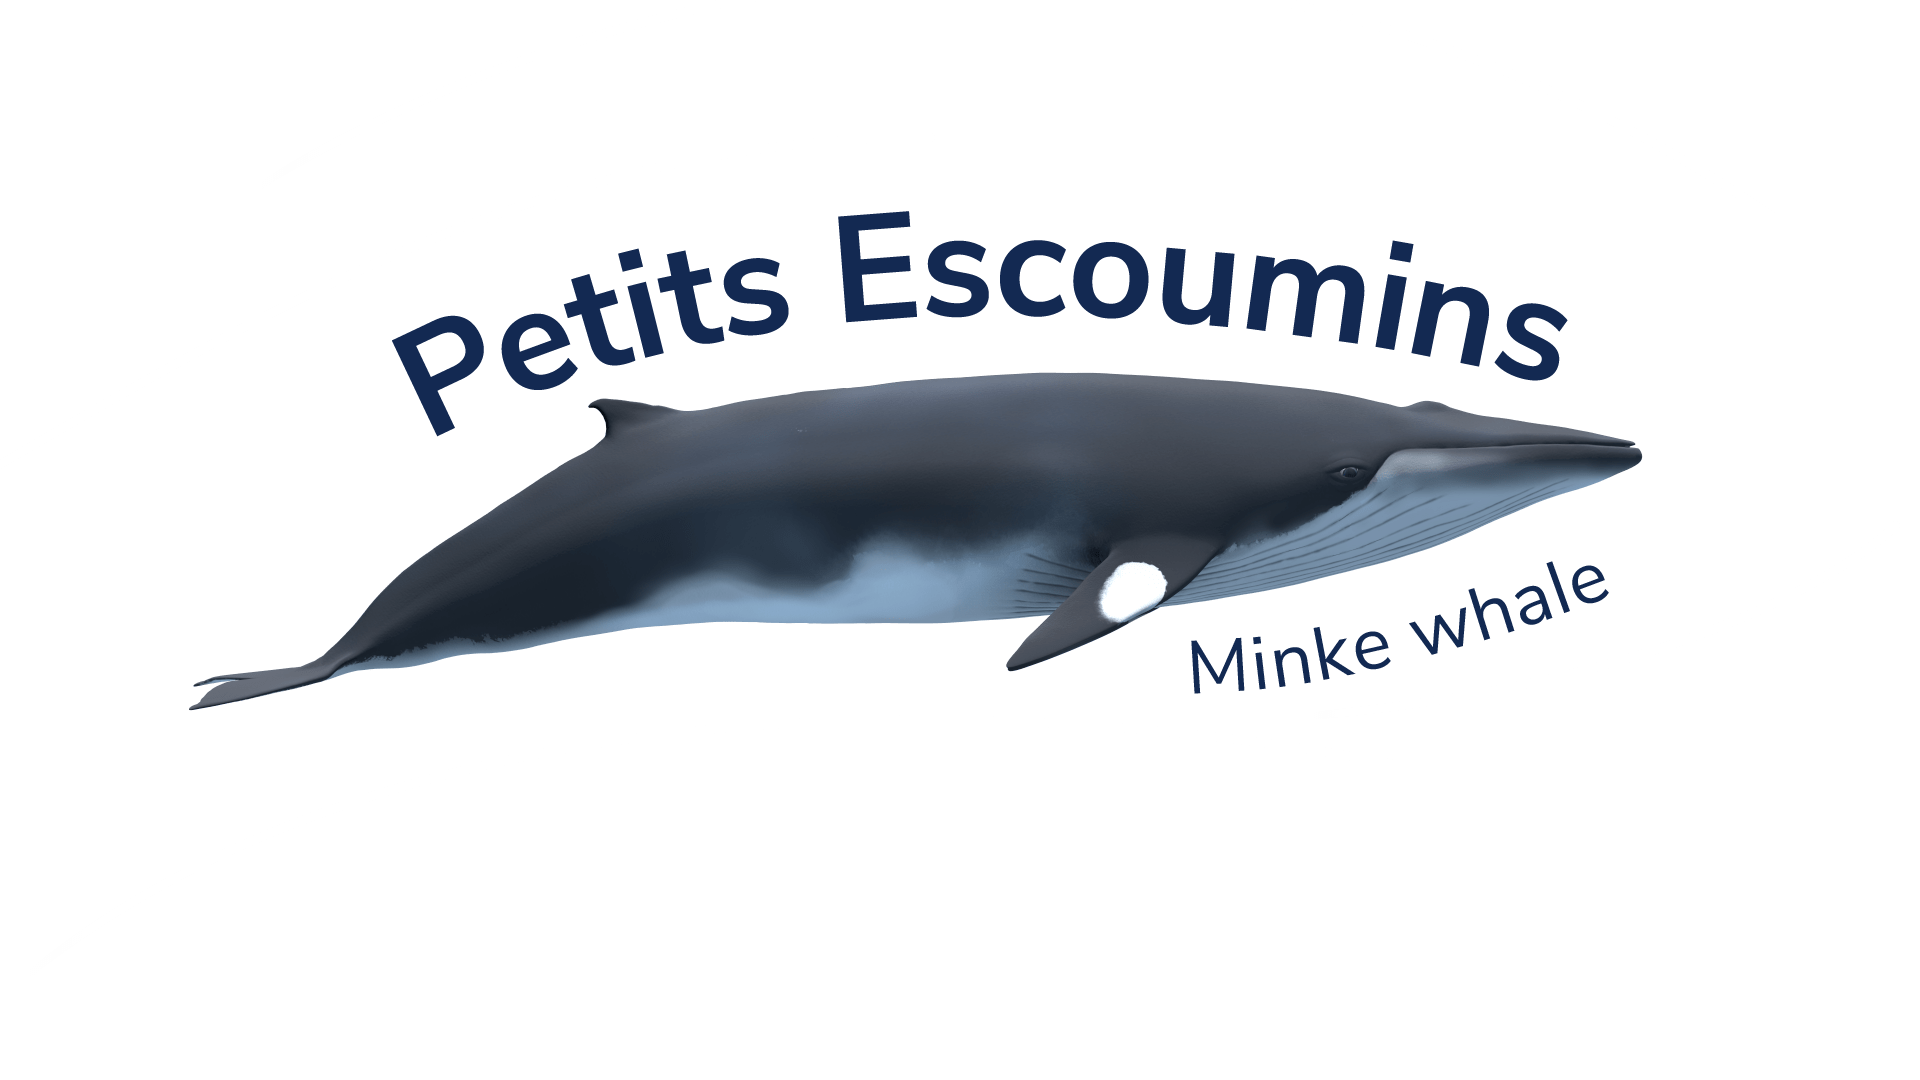 The minke whale Petits Escoumins